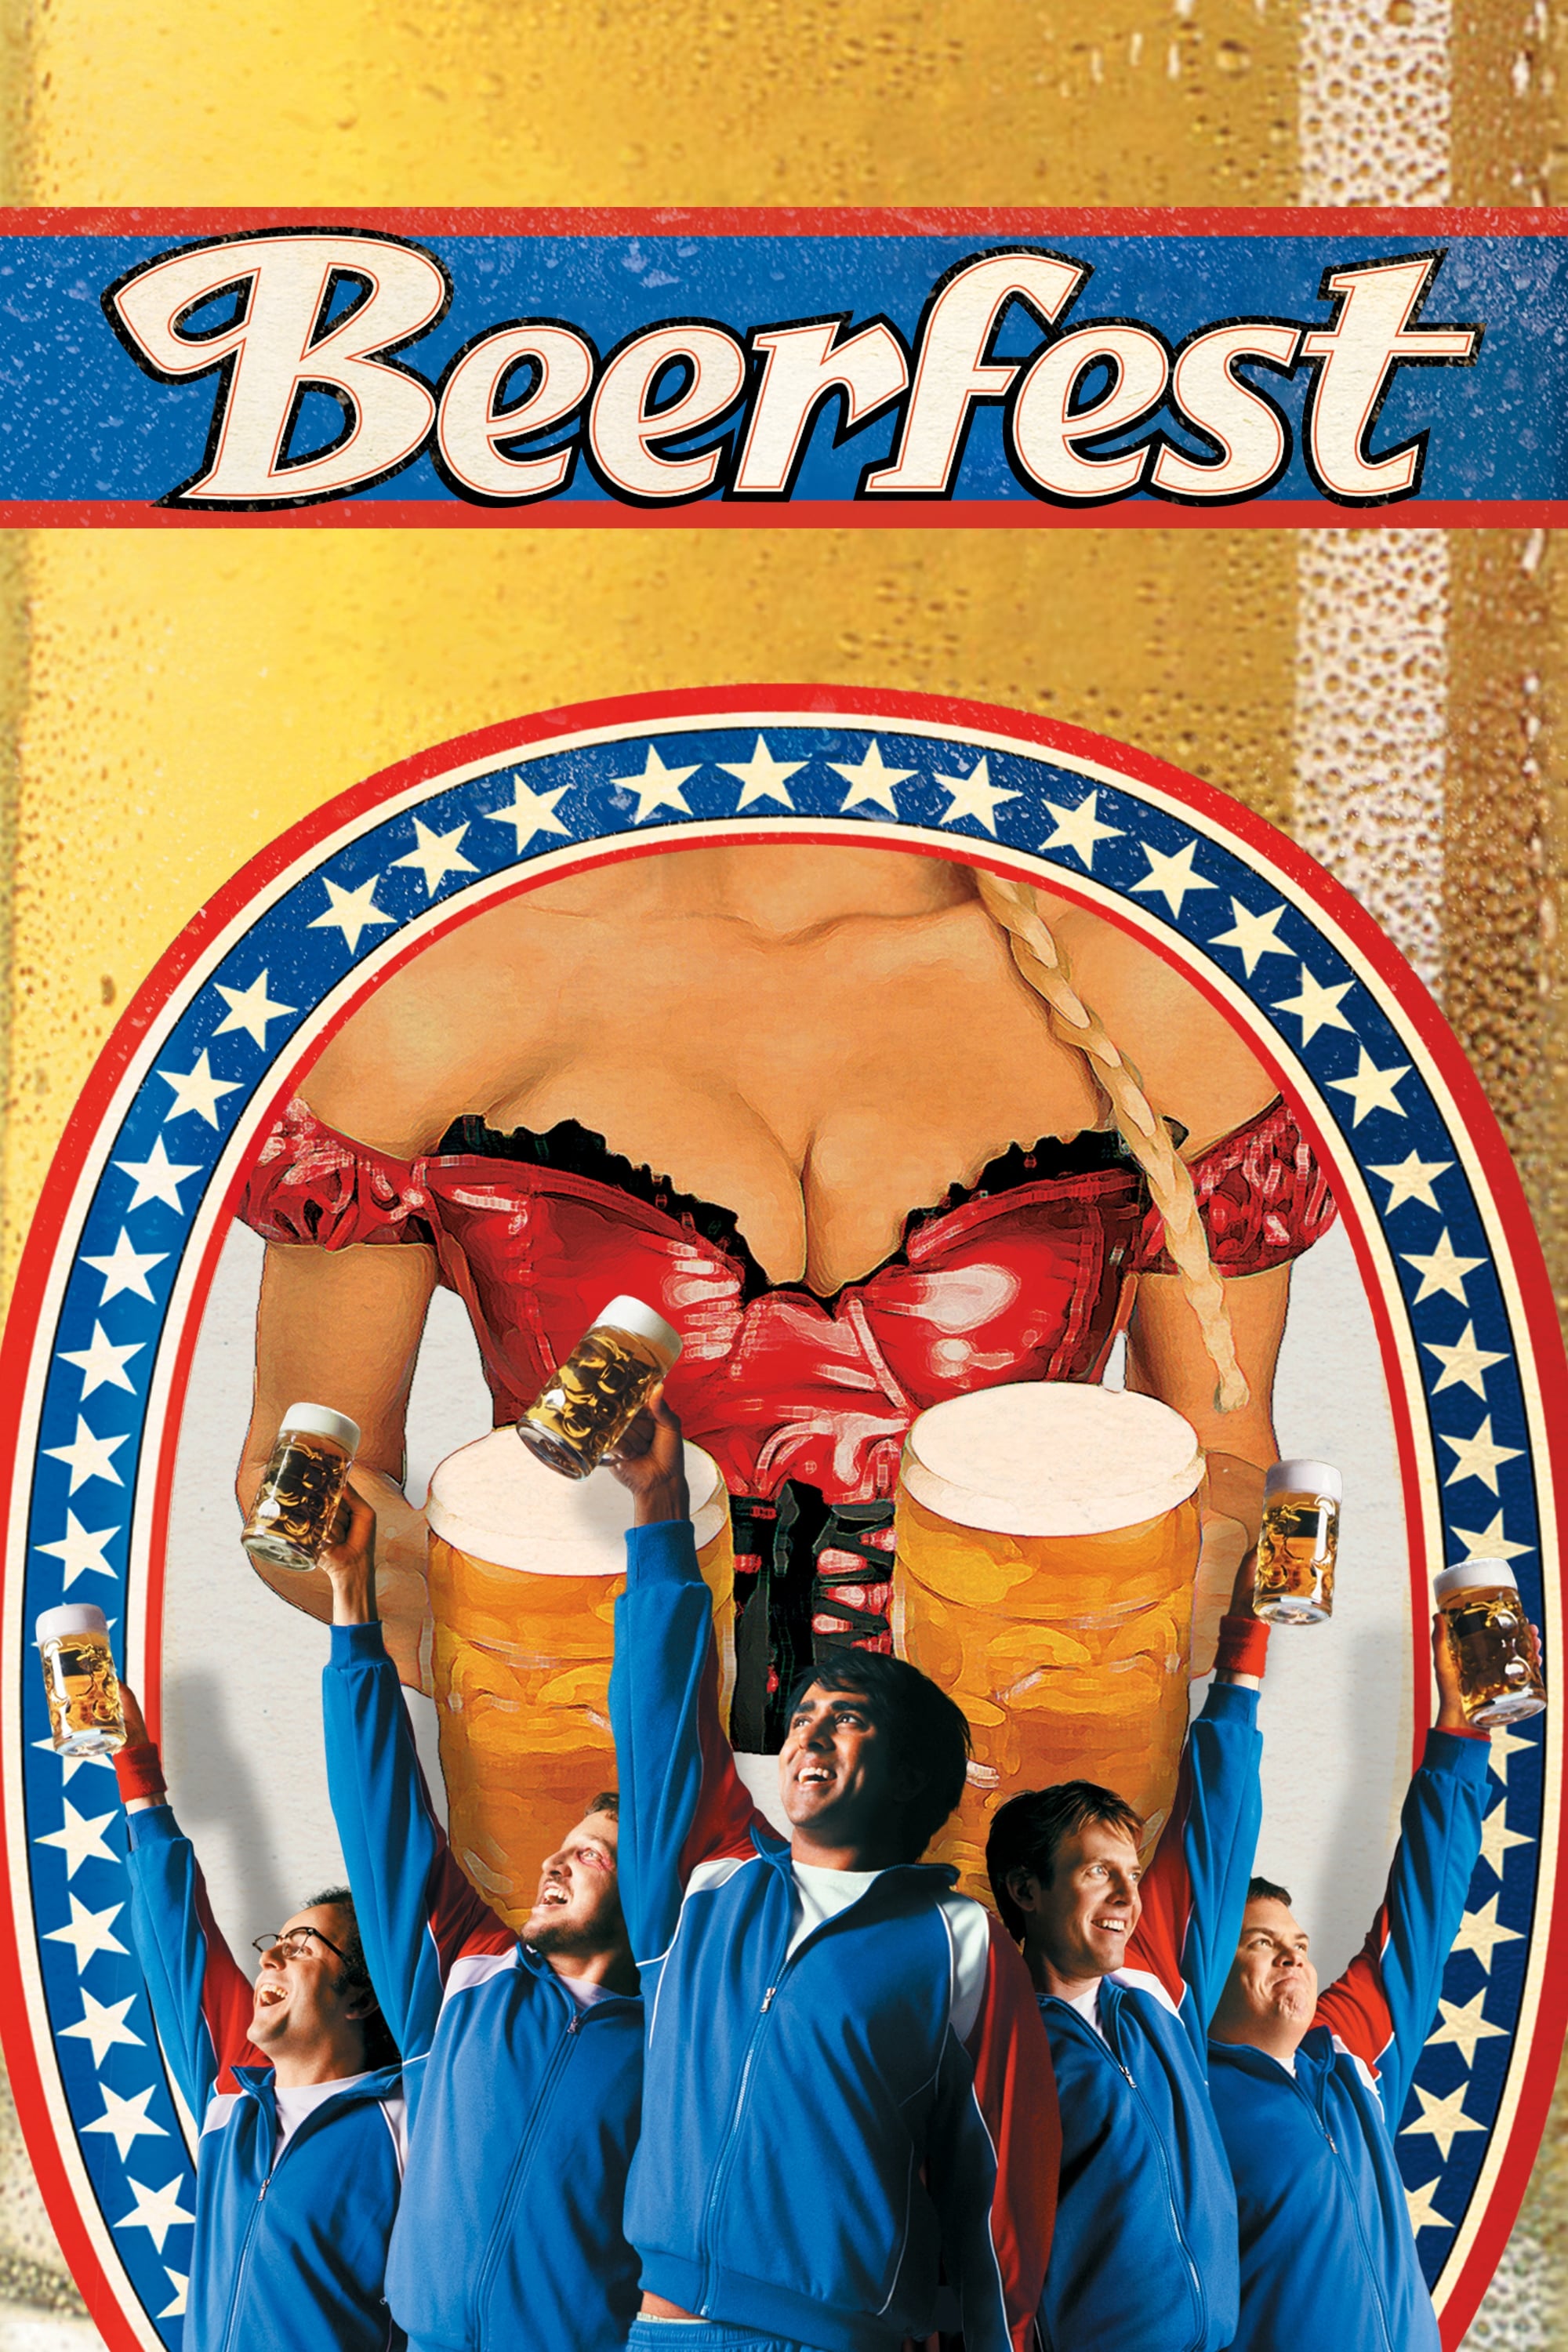 Beerfest (2006)